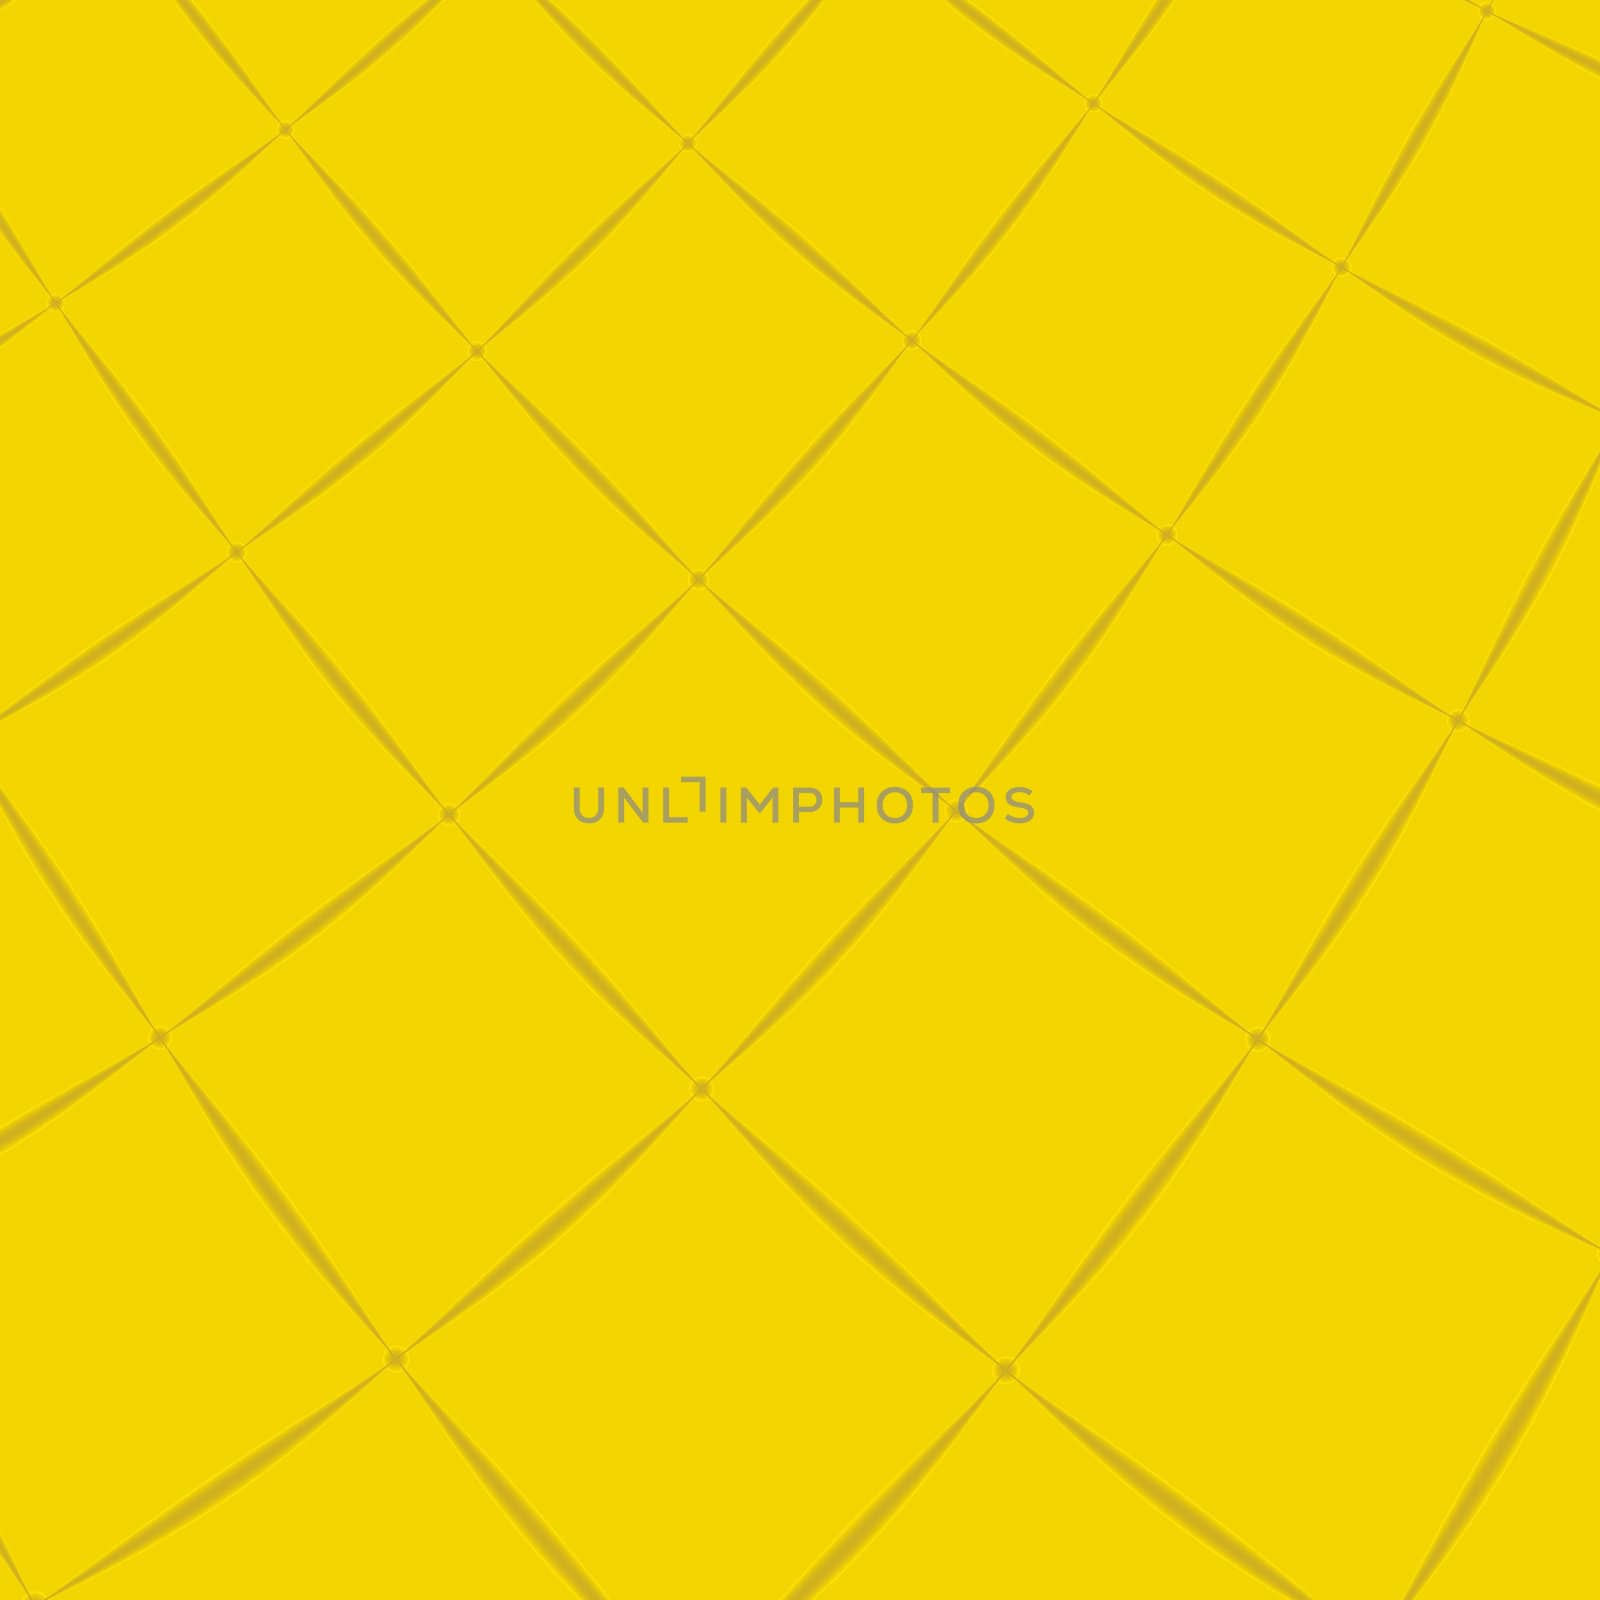 Abstract brown & golden fractal grid background by klinok